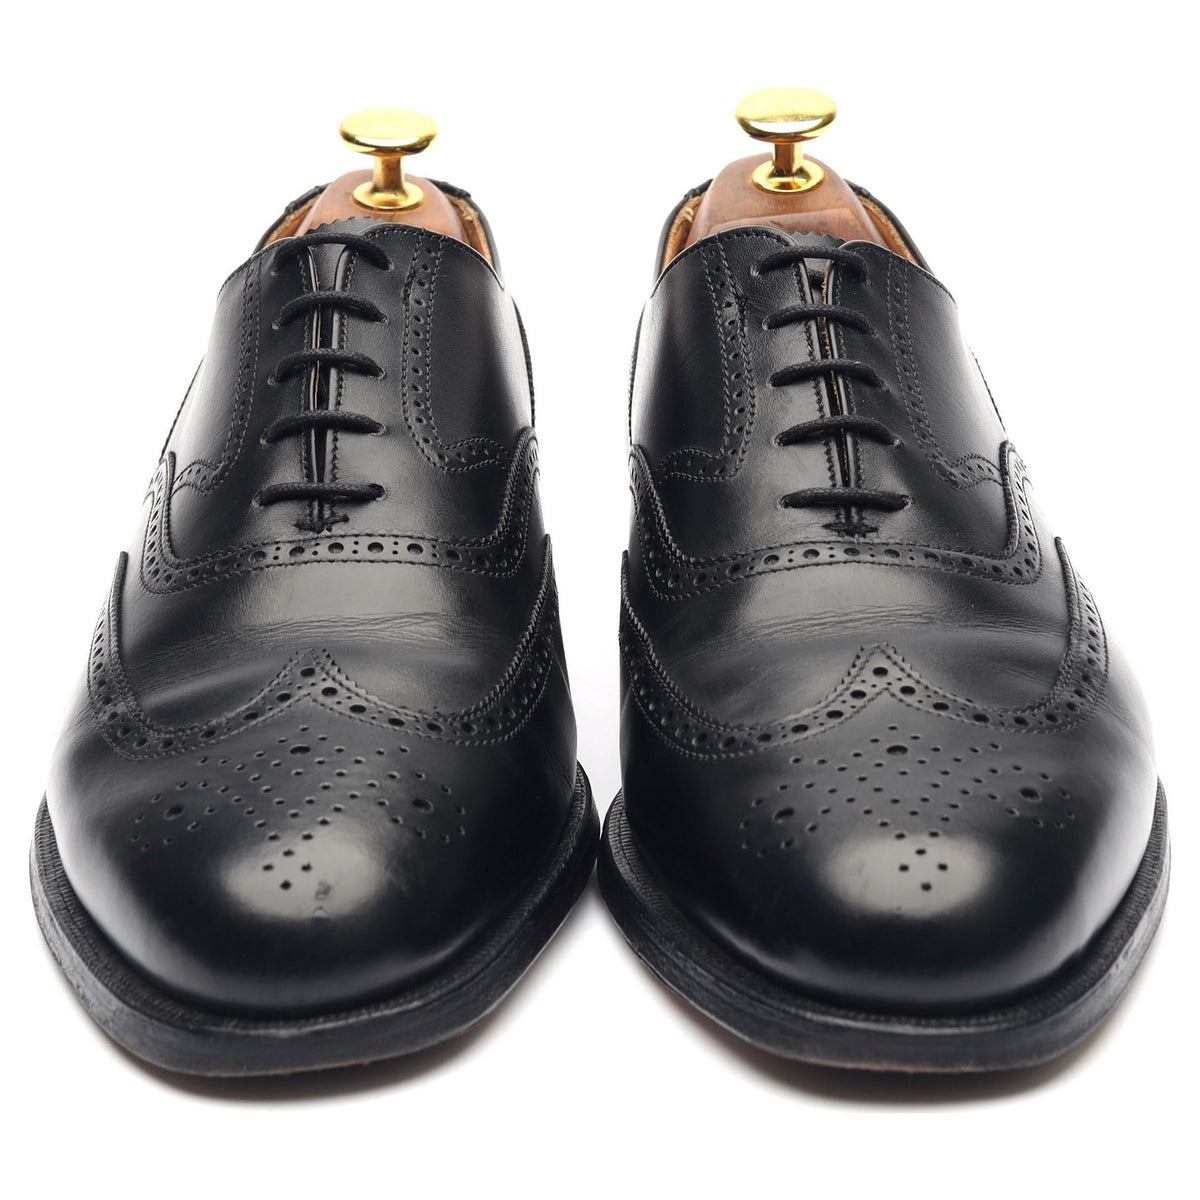 Peal &amp; Co Black Leather Brogues UK 6.5 G US 7.5 E